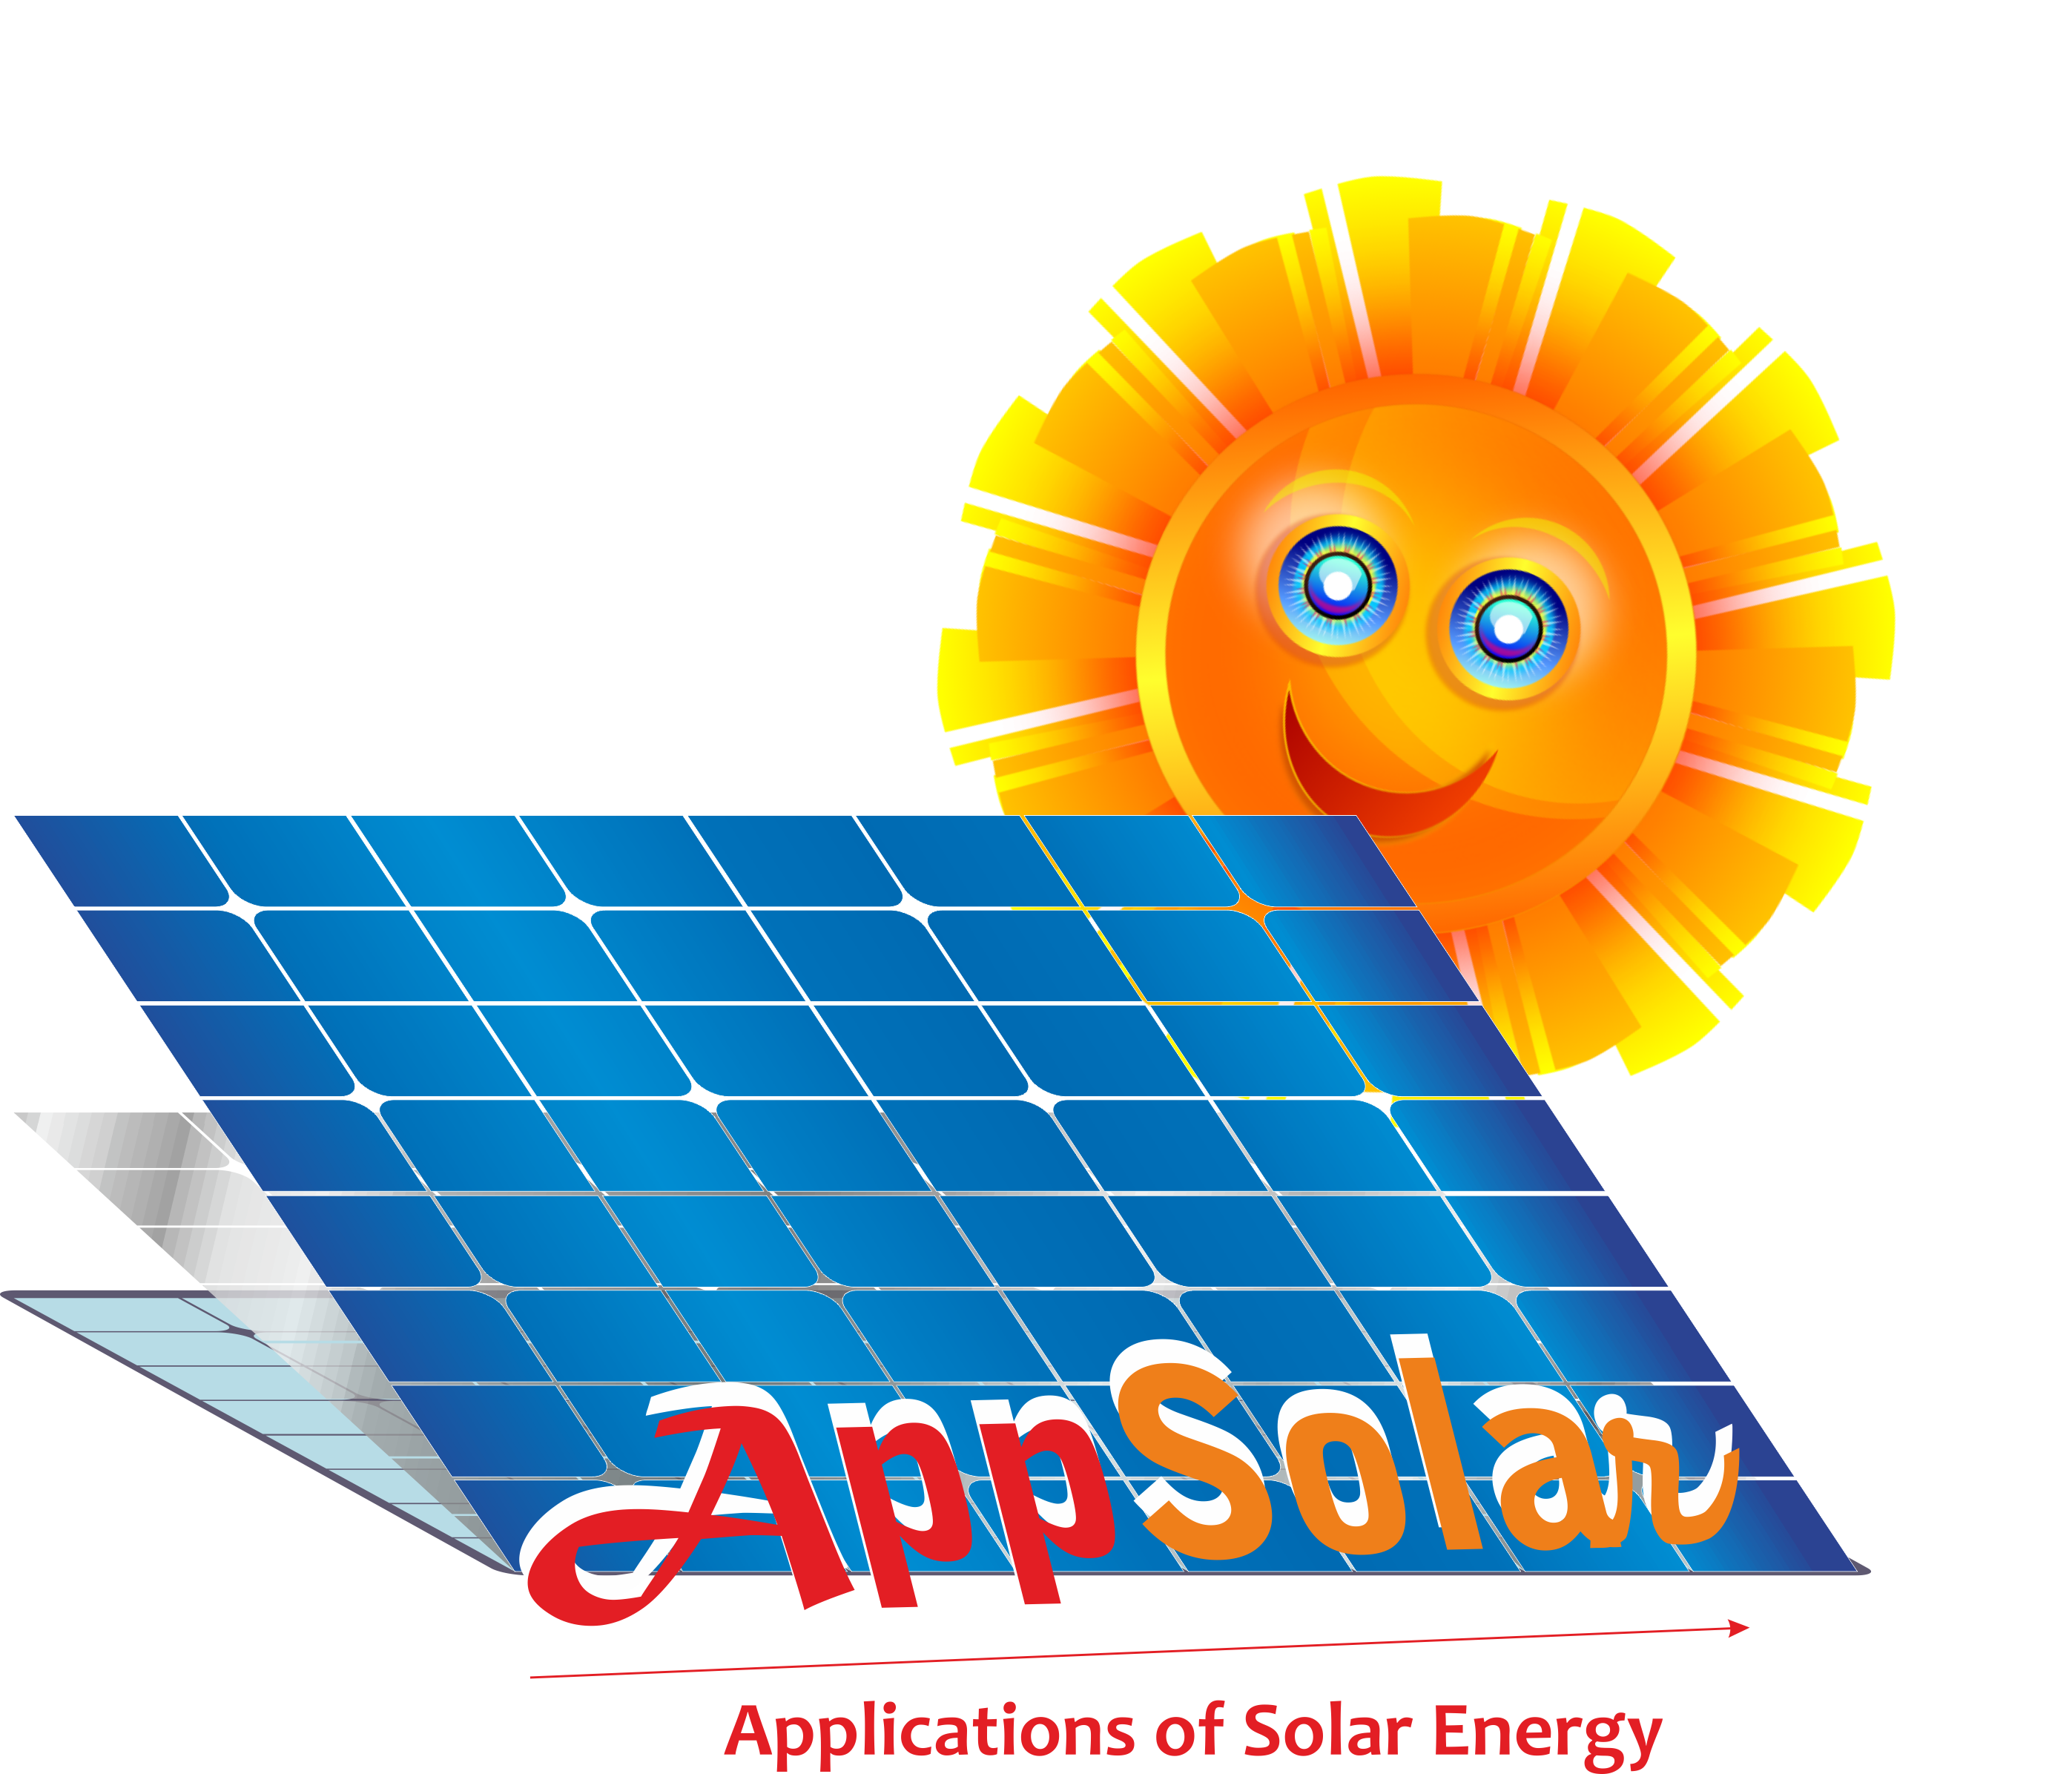 Energy clipart solar power. Appsolar nsw reviews ratings